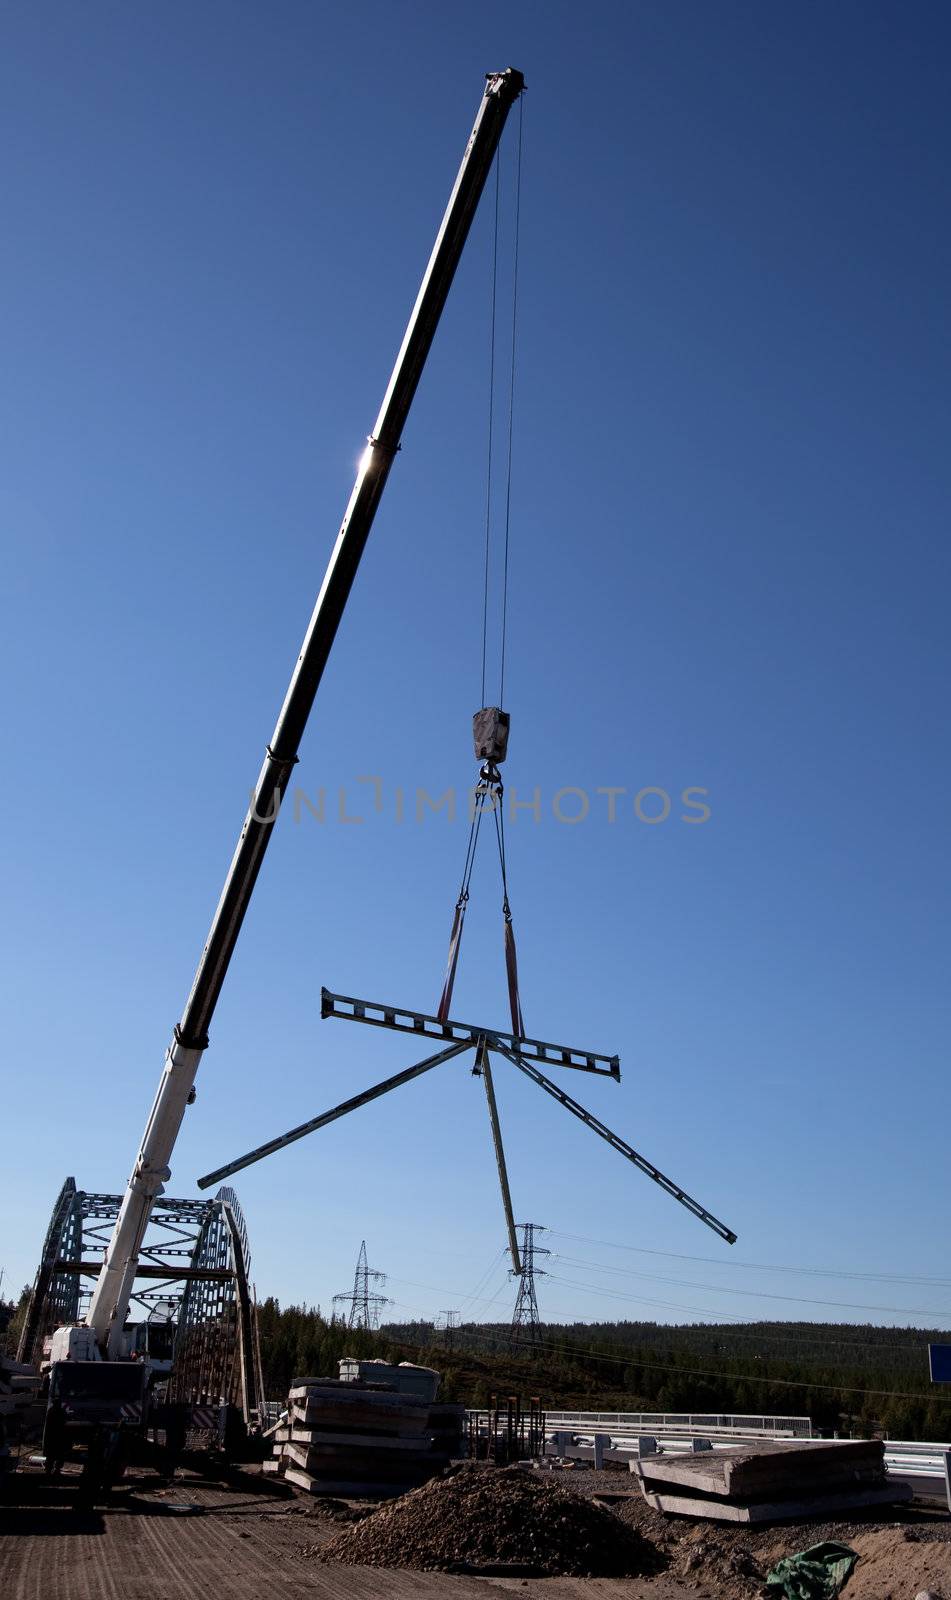 
Mobile crane lifts part of the bridge against the blue sky
